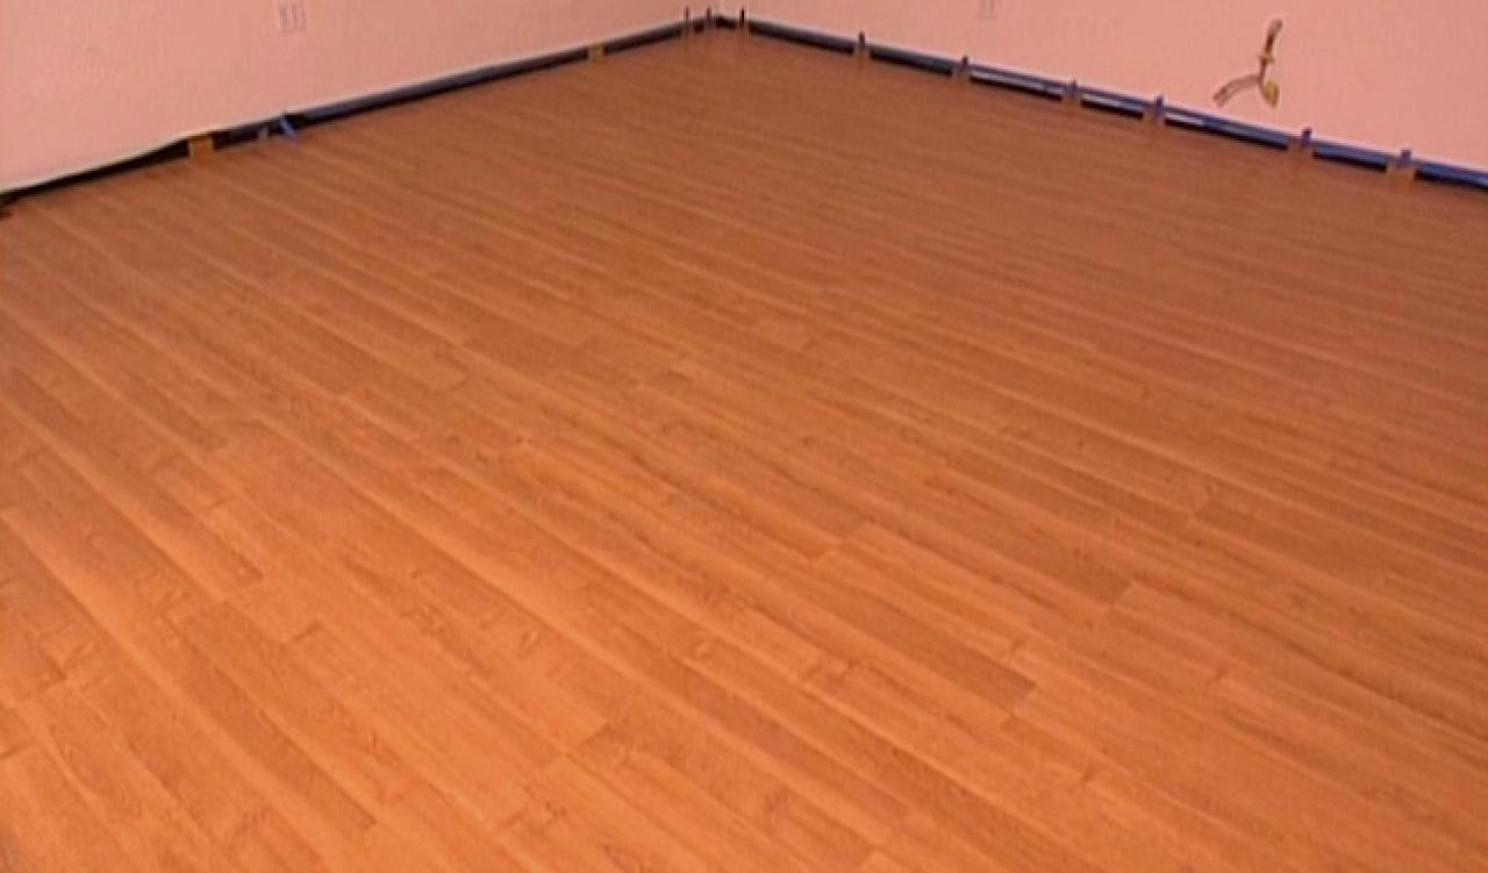 12 Awesome Laminate Floor or Hardwood Floor 2024 free download laminate floor or hardwood floor of how to stain a hardwood floor awesome floor a close up shot od a with how to stain a hardwood floor awesome floor a close up shot od a ideas of